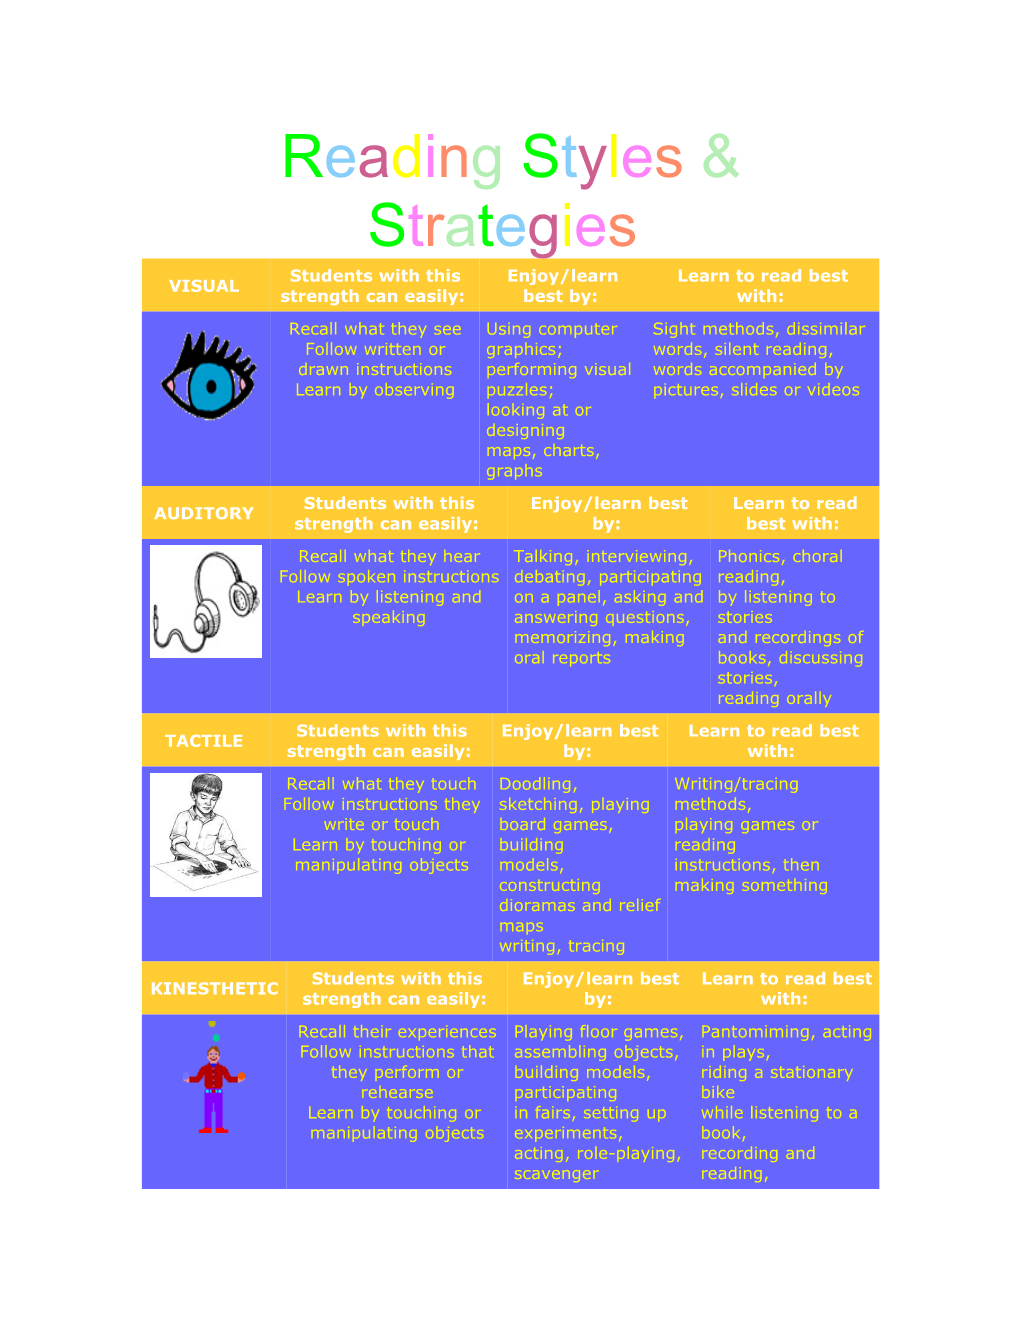 Reading Styles & Strategies